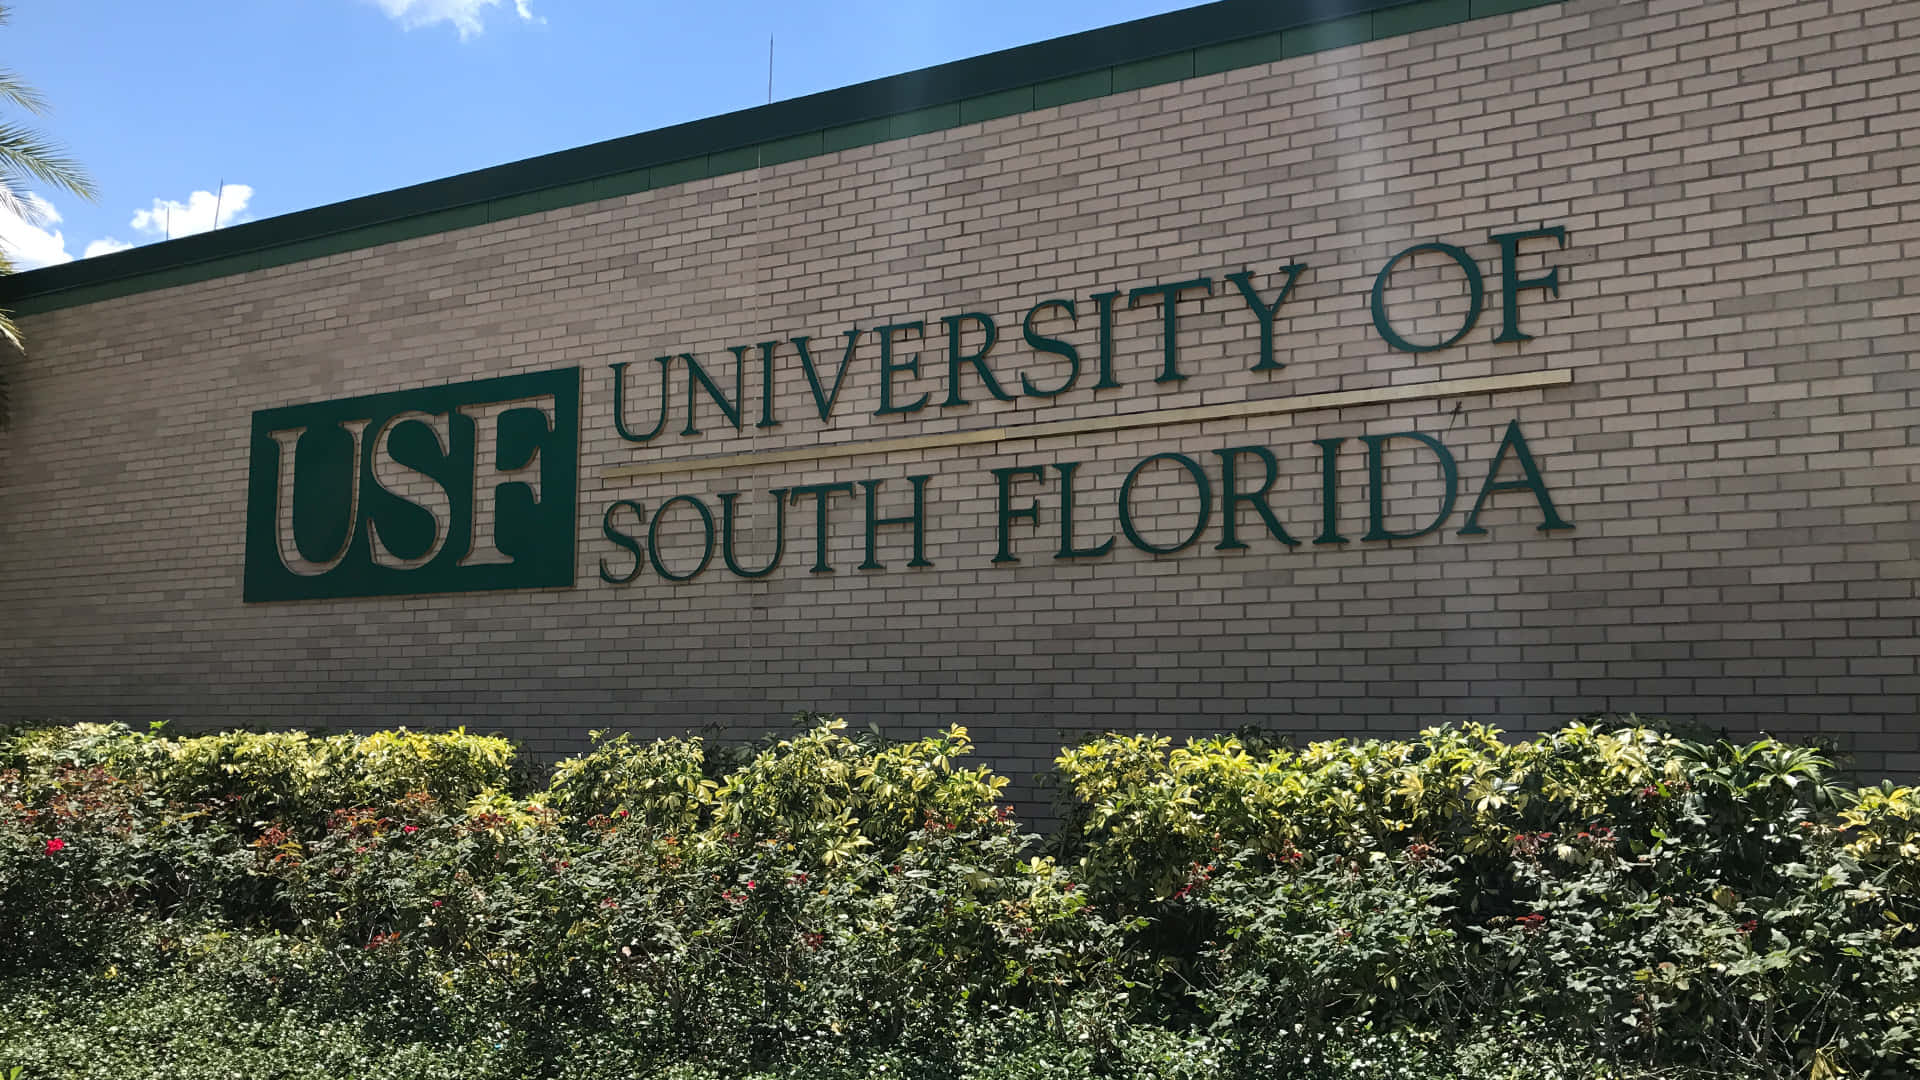 University Of South Florida Signage Brick Wallpaper